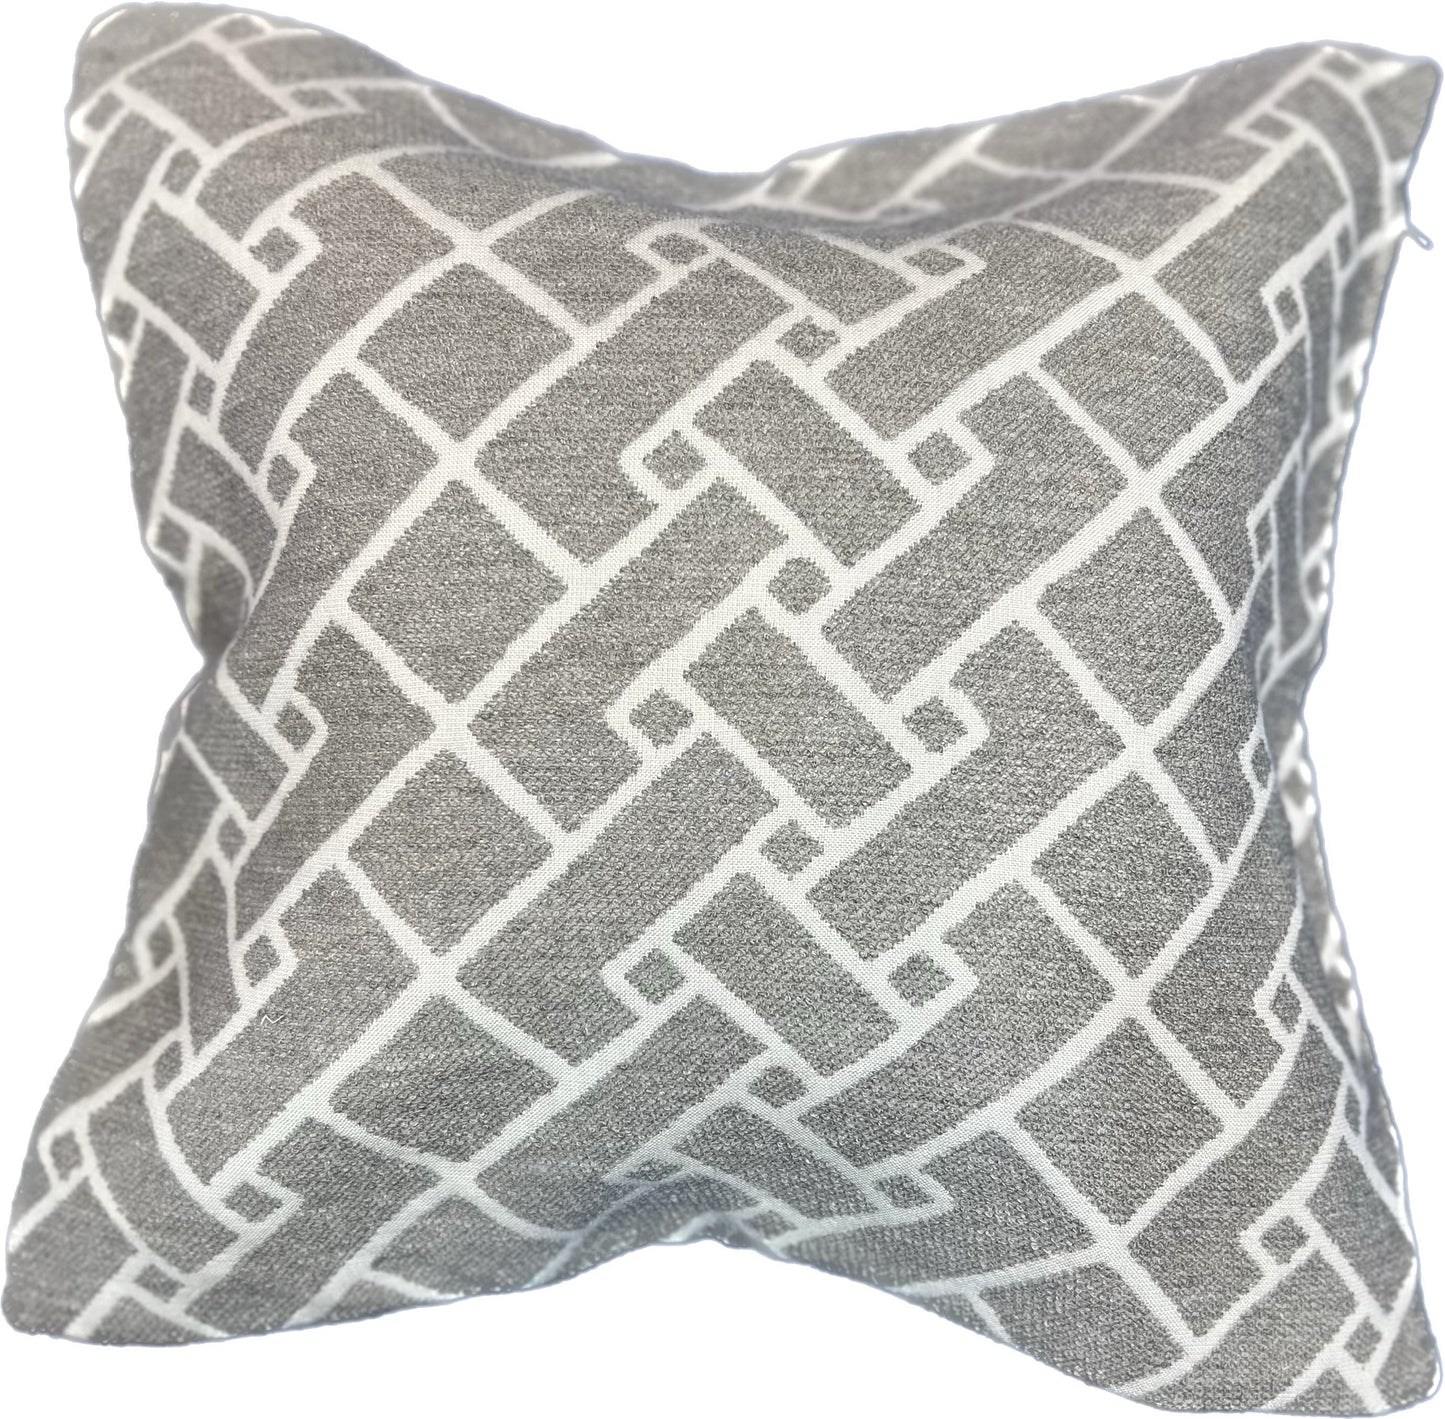 17"x17" Geometric Pillow Cover